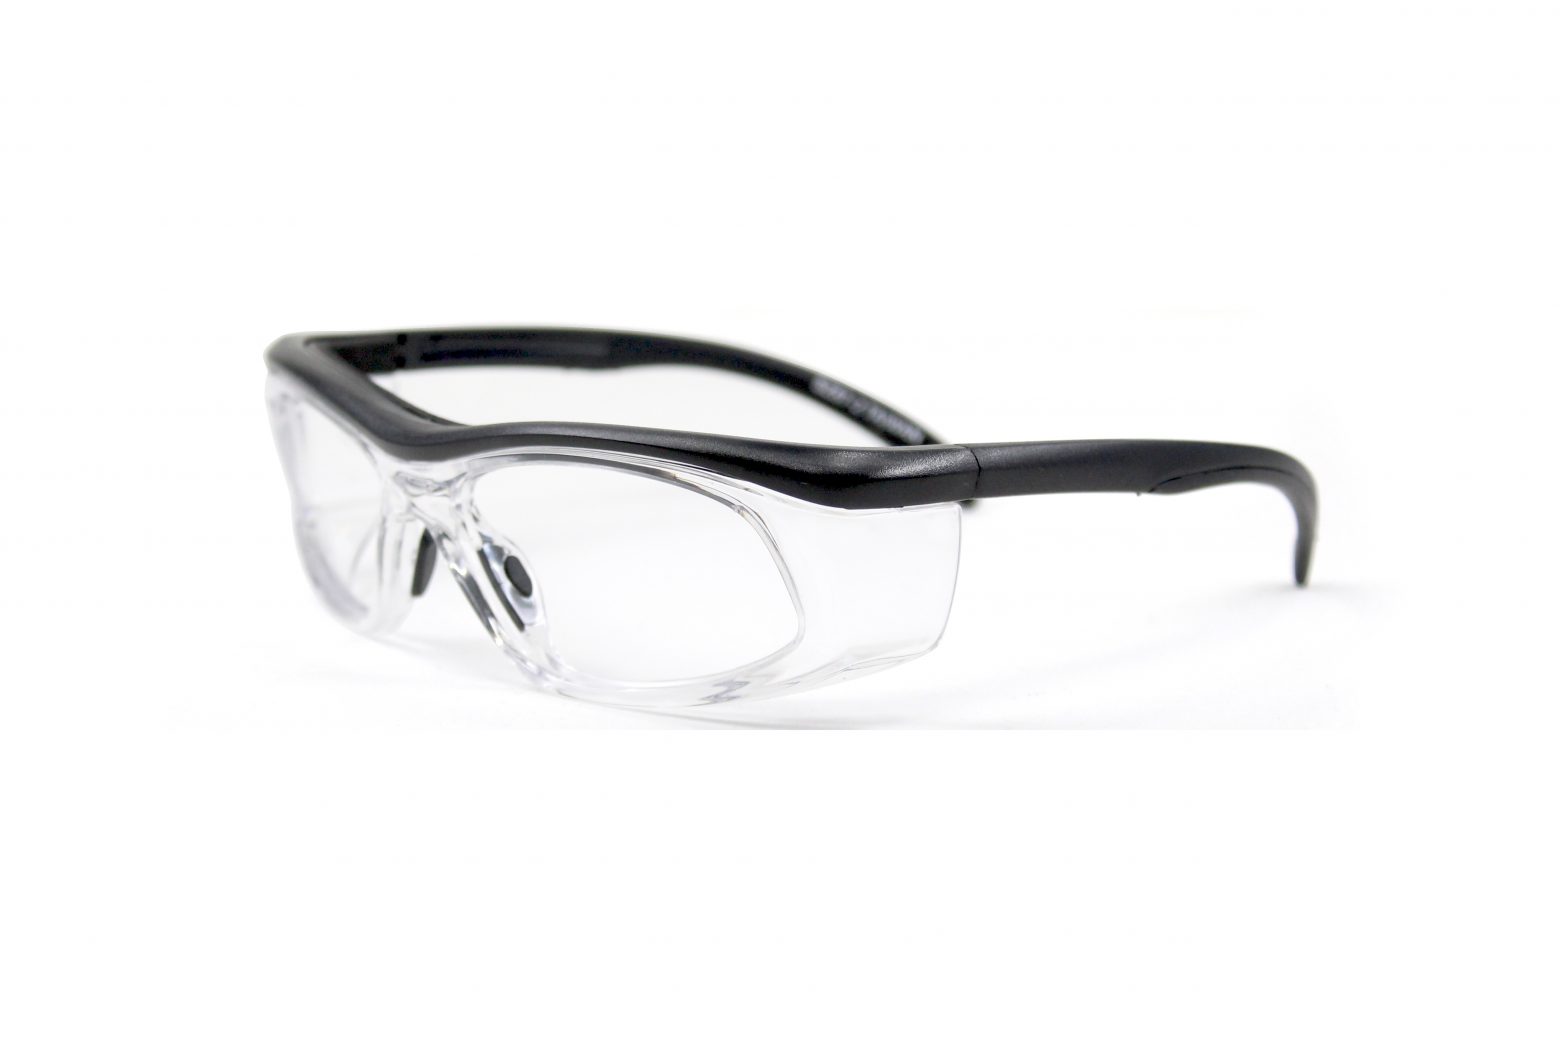 SafeVision Uverse Prescription Safety Glasses - Wrap Around